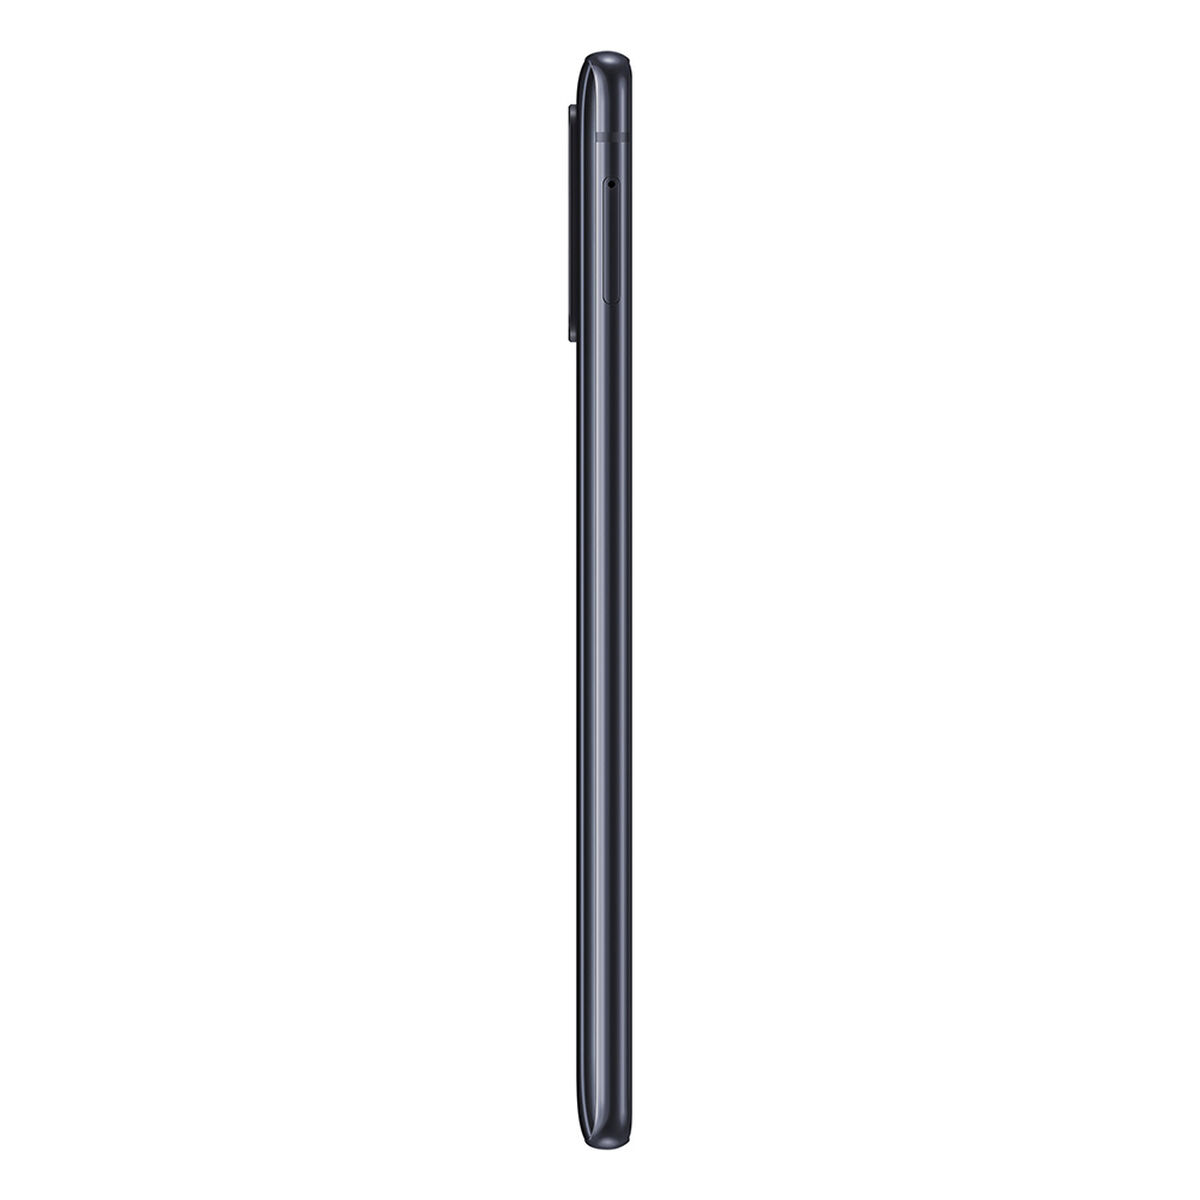 Celular Samsung Galaxy S10 Lite 128GB 6,7" Negro Liberado